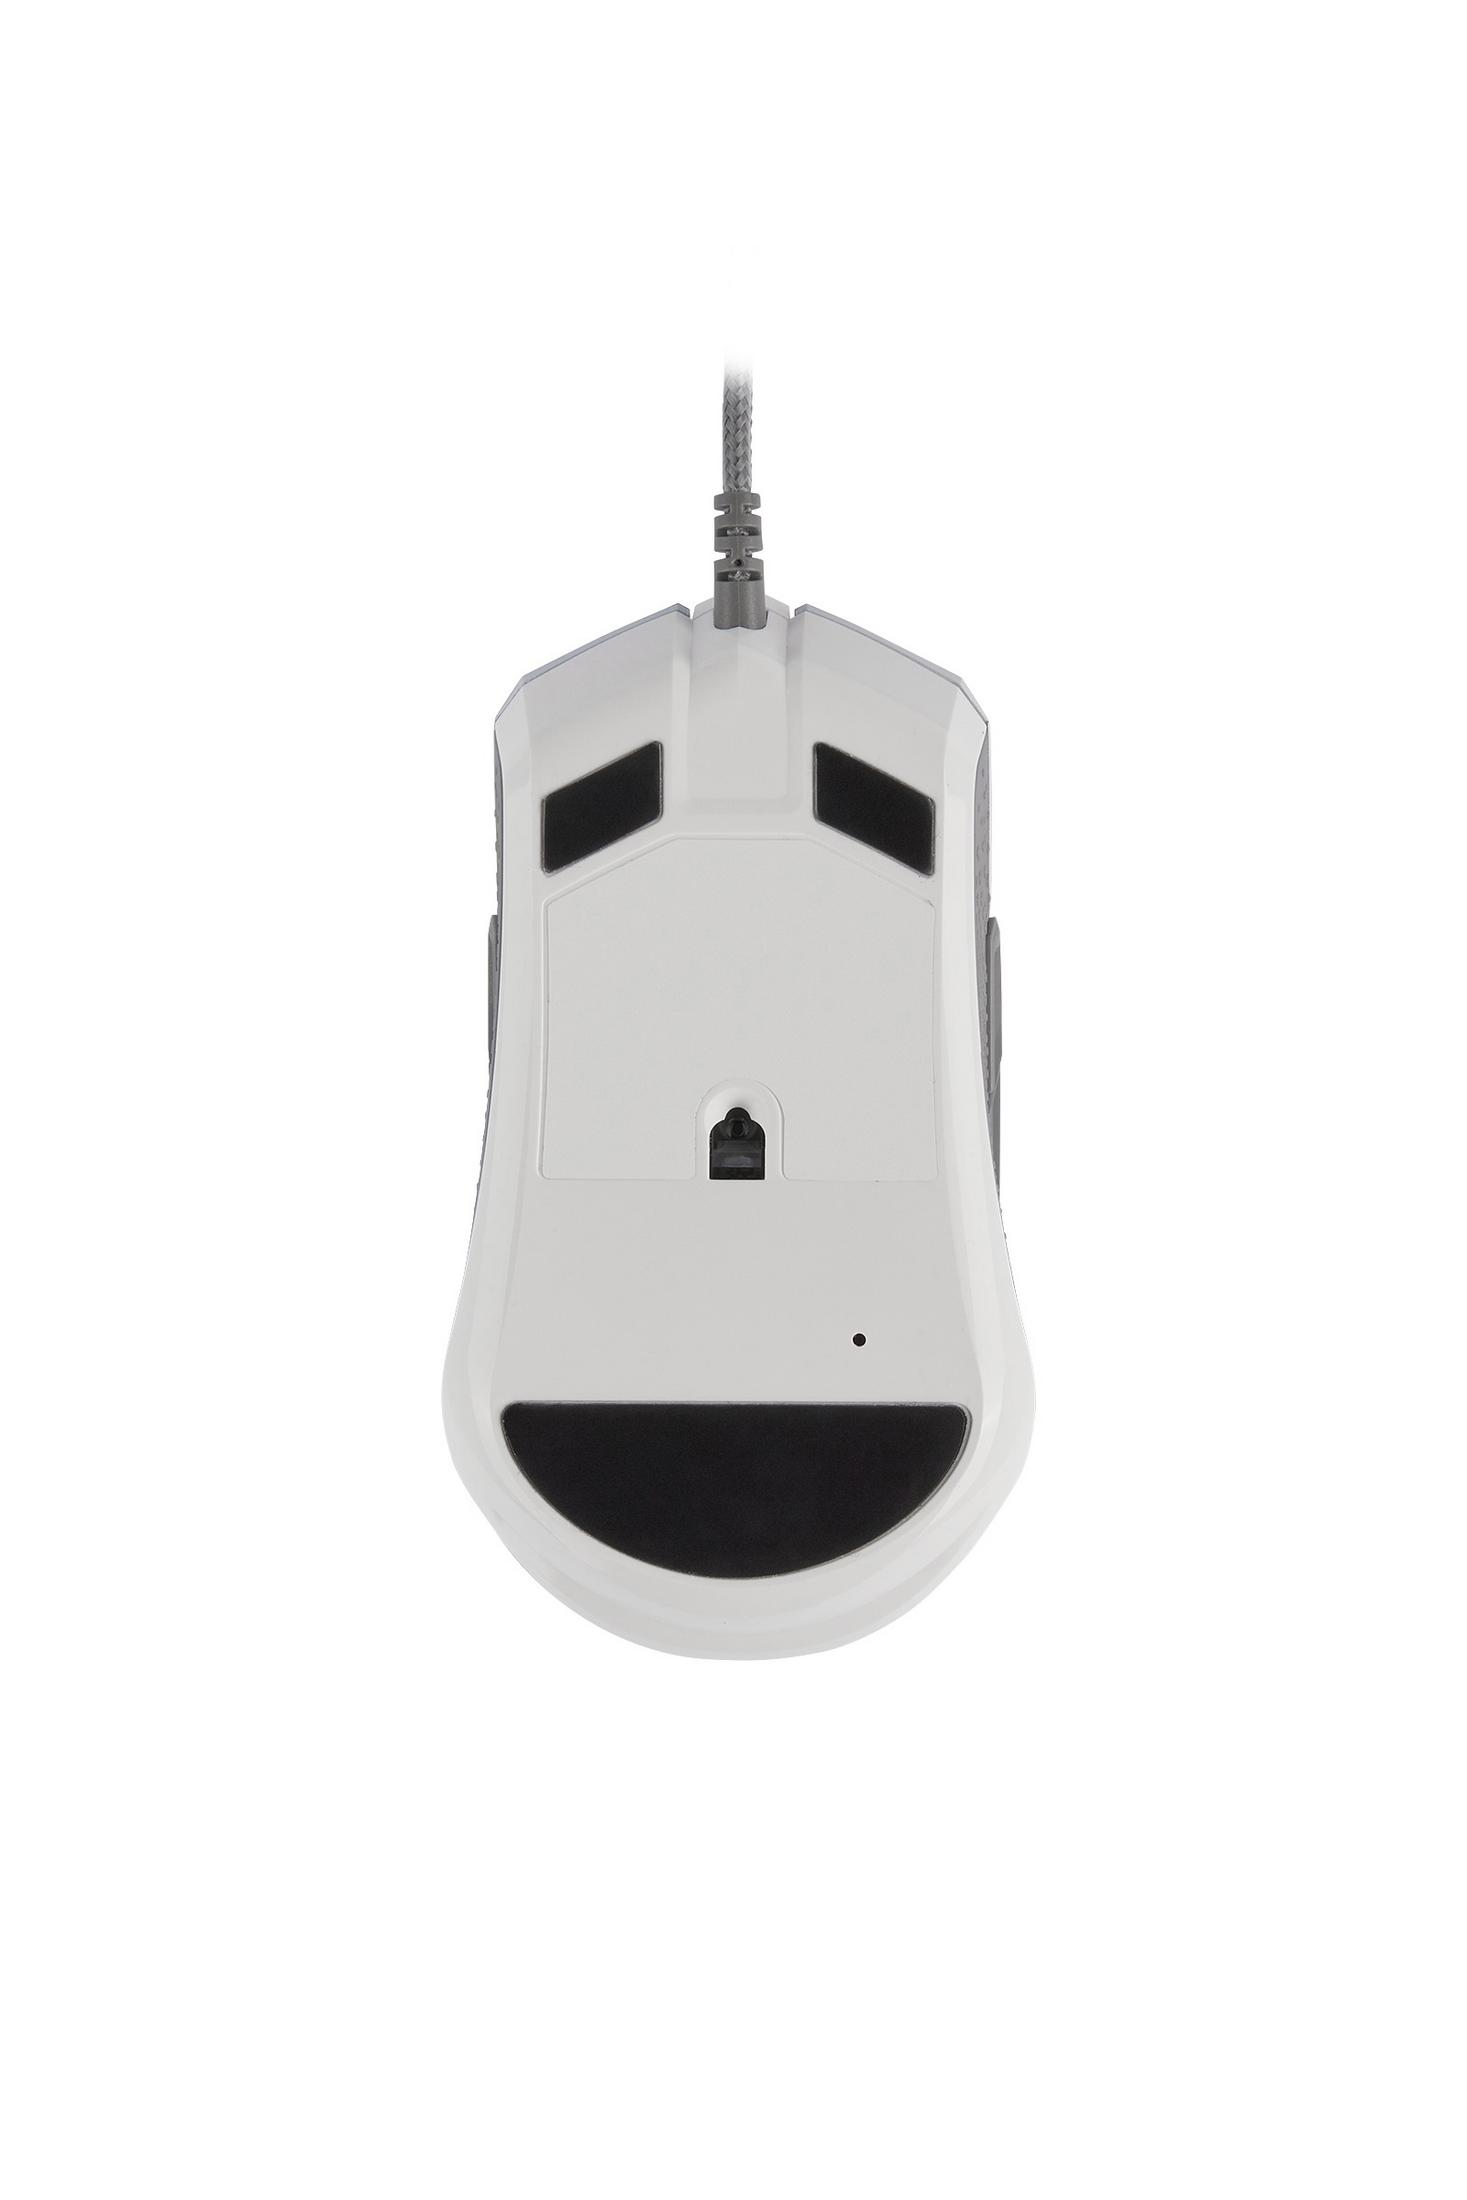 CORSAIR CH-9308111-EU M55 RGB PRO Gaming-Maus, Weiß